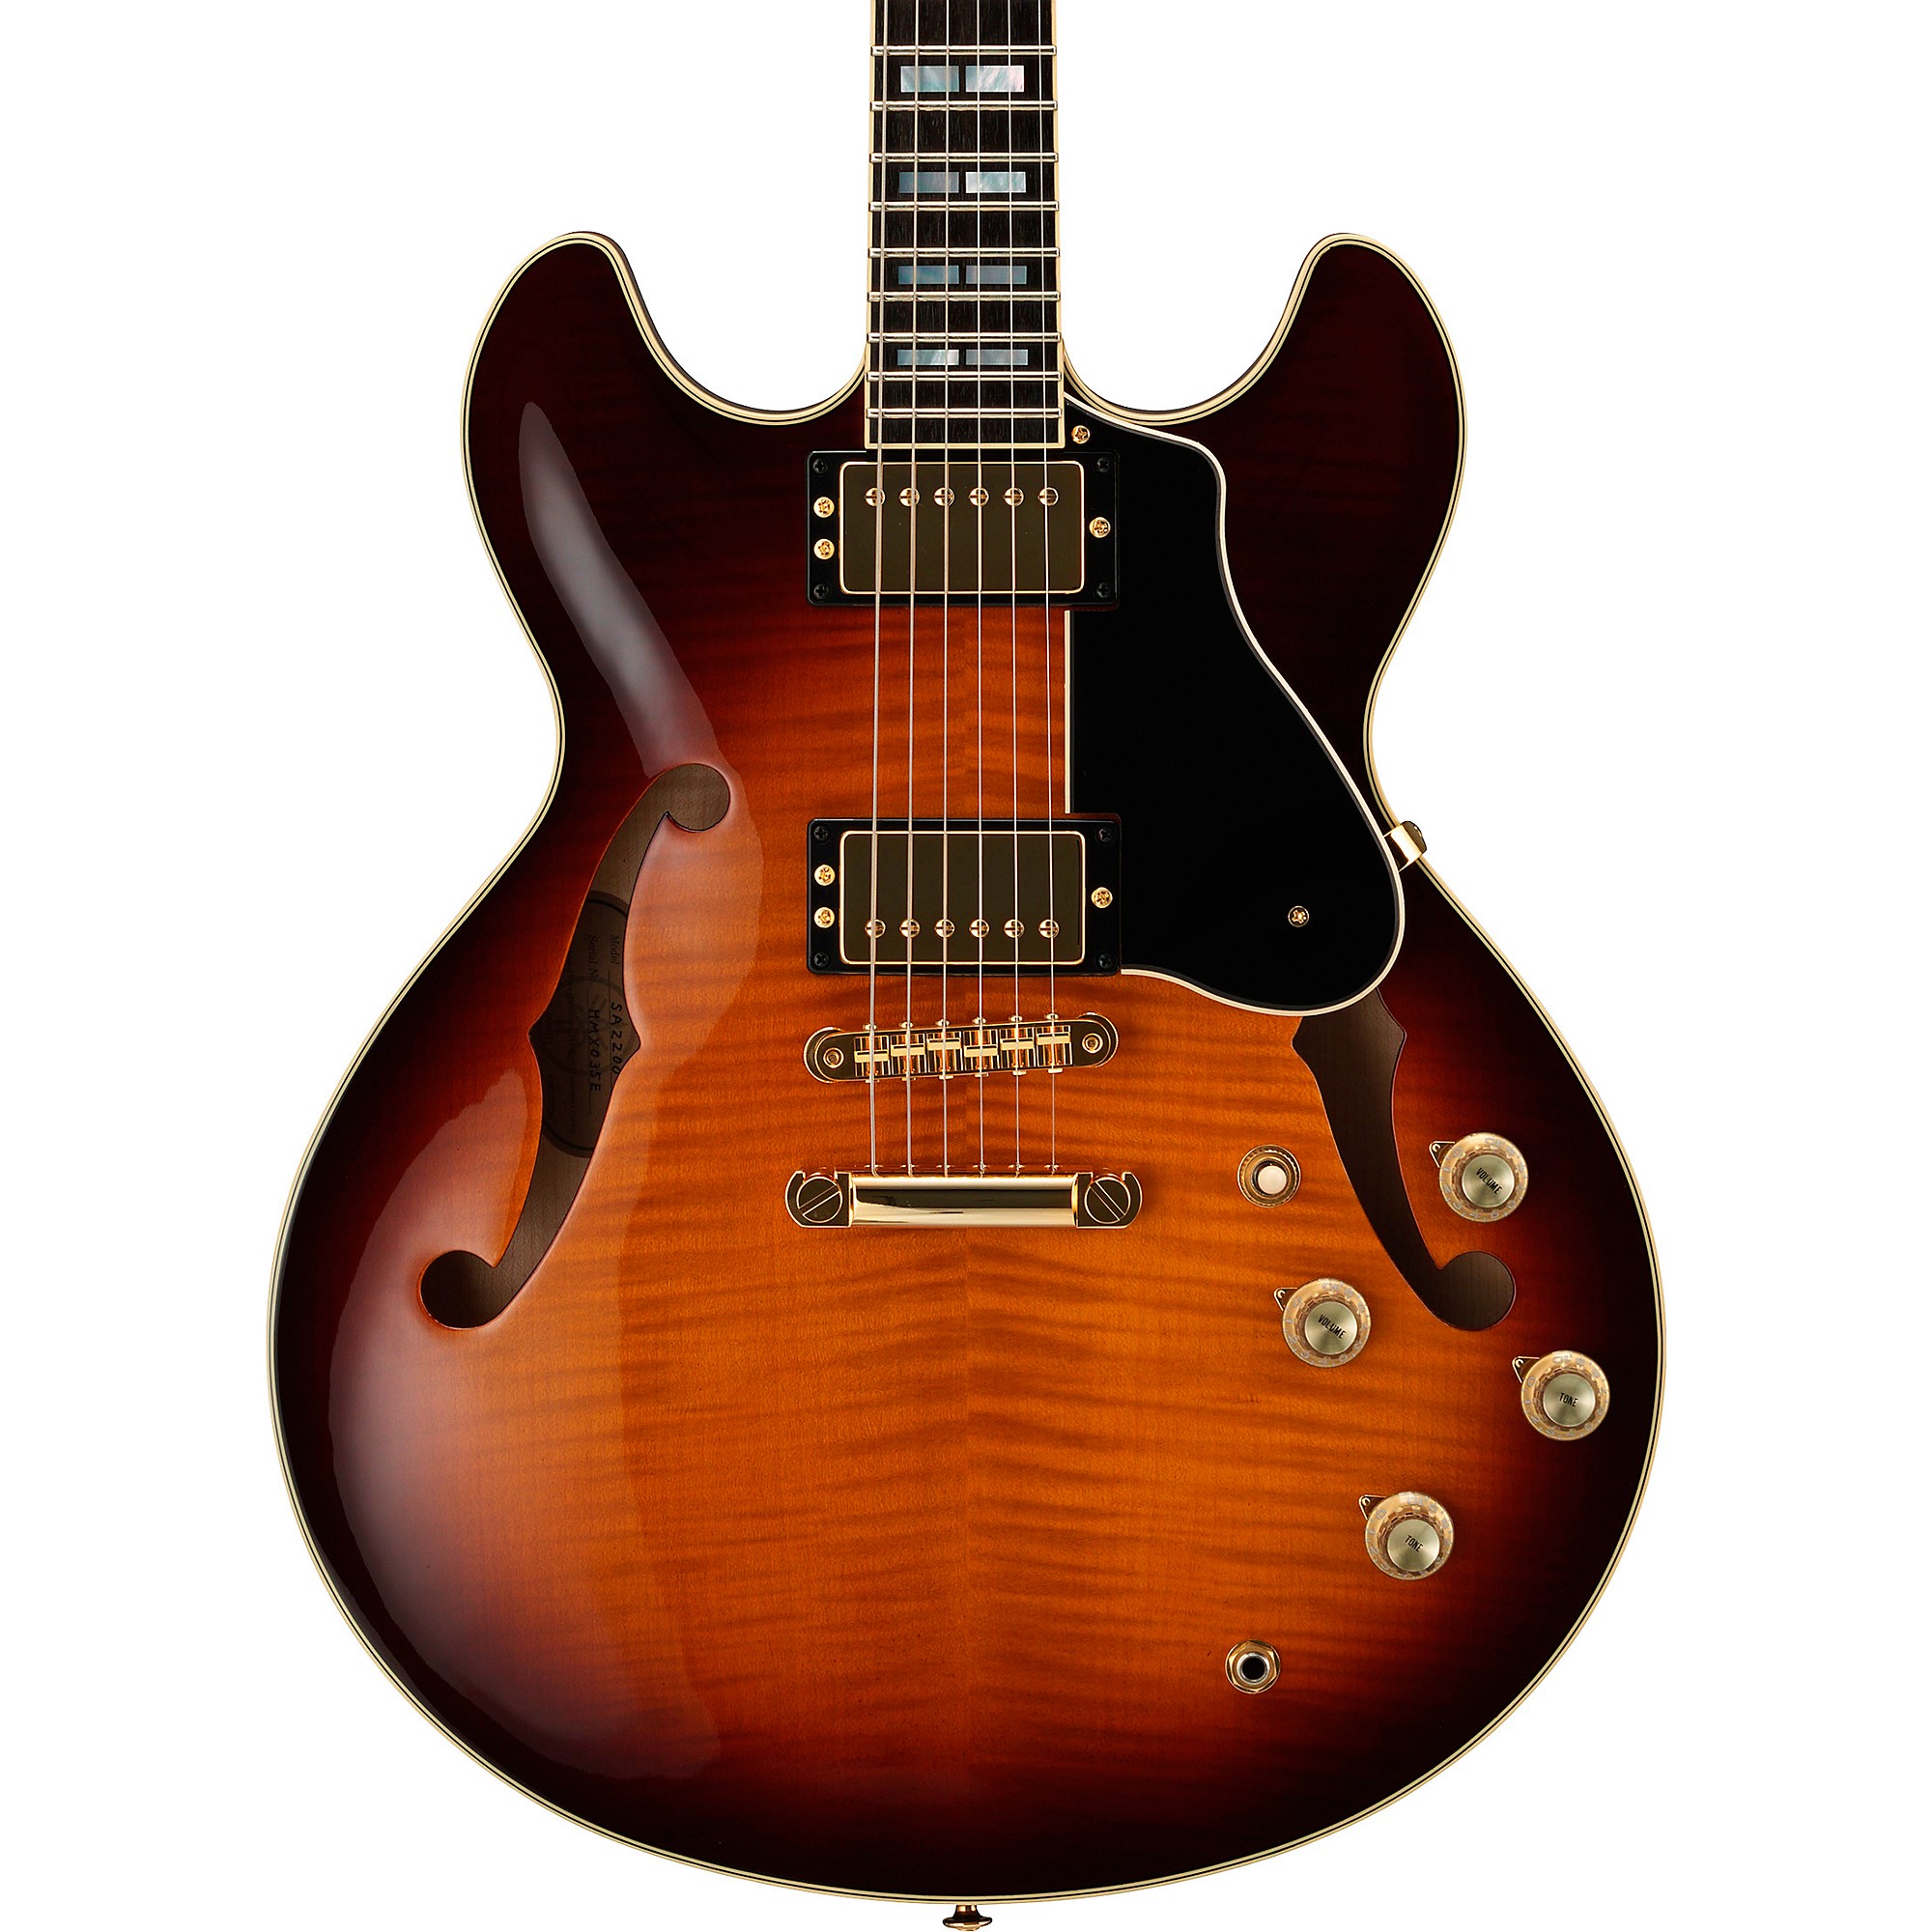 Полуполая электрогитара Yamaha SA2200, коричневая полуакустическая электрогитара yamaha sa2200 2022 brown sunburst sa2200 semi hollow electric guitar